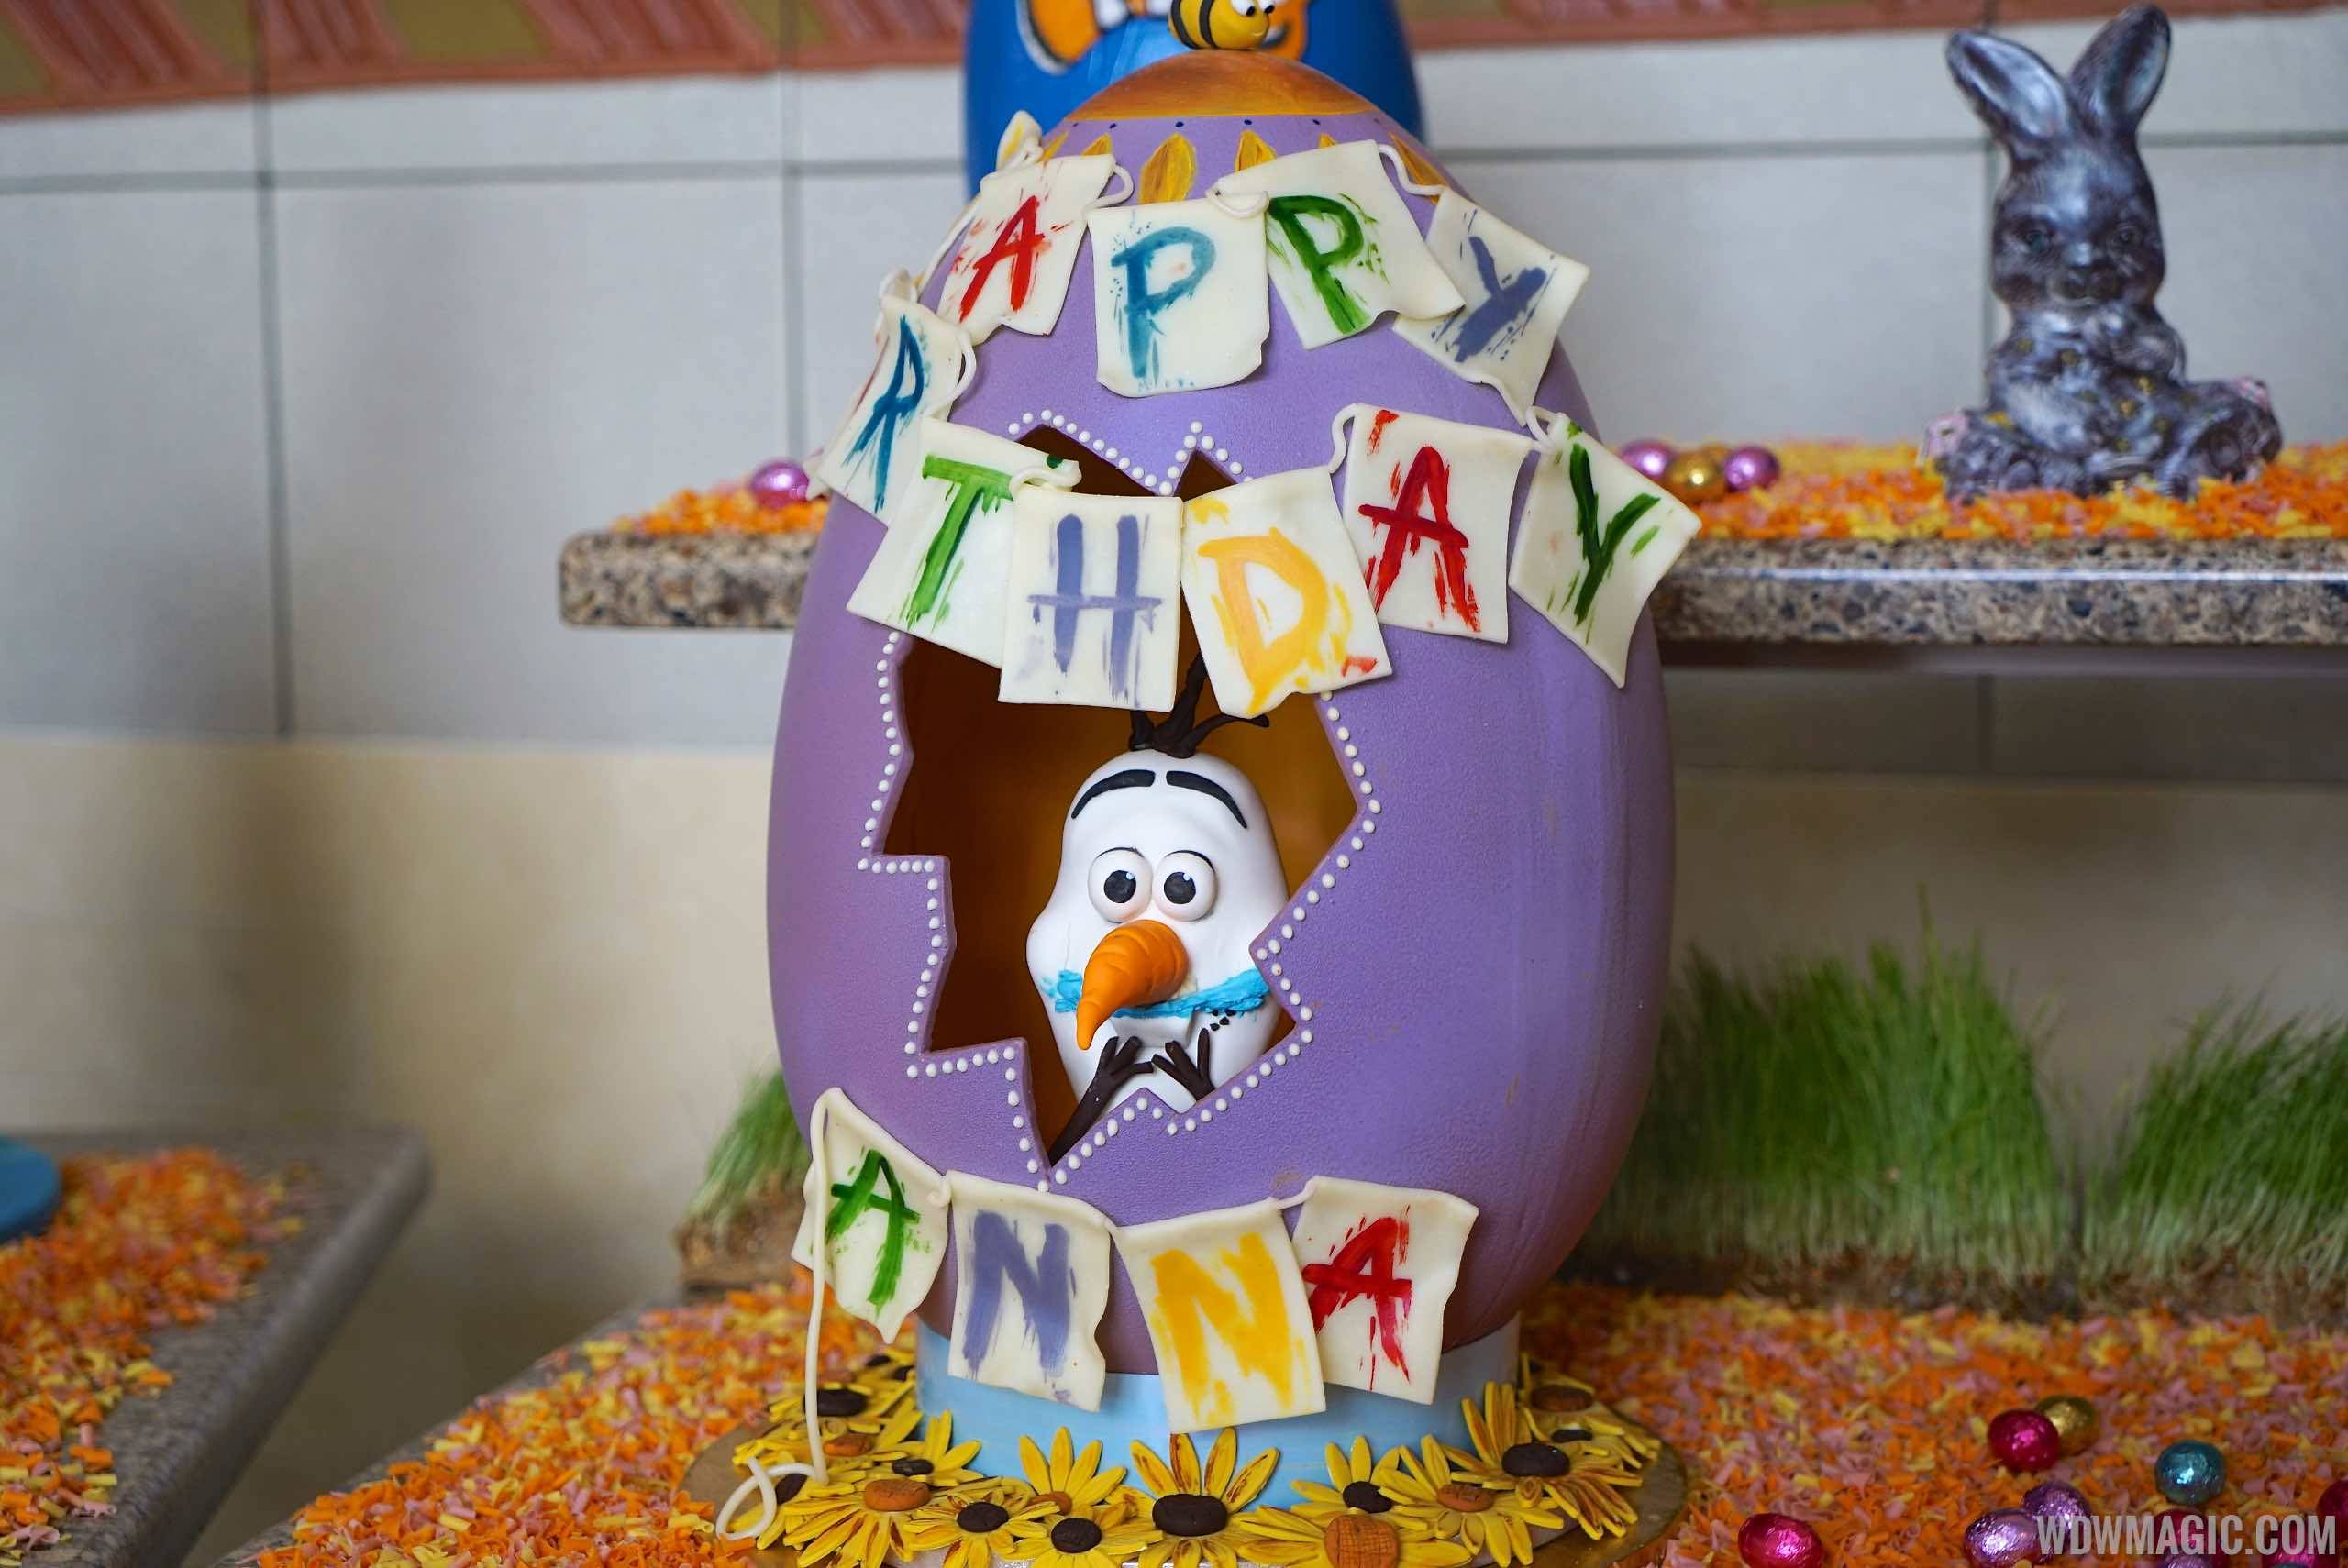 Disney's Contemporary Resort 2015 Easter Egg display